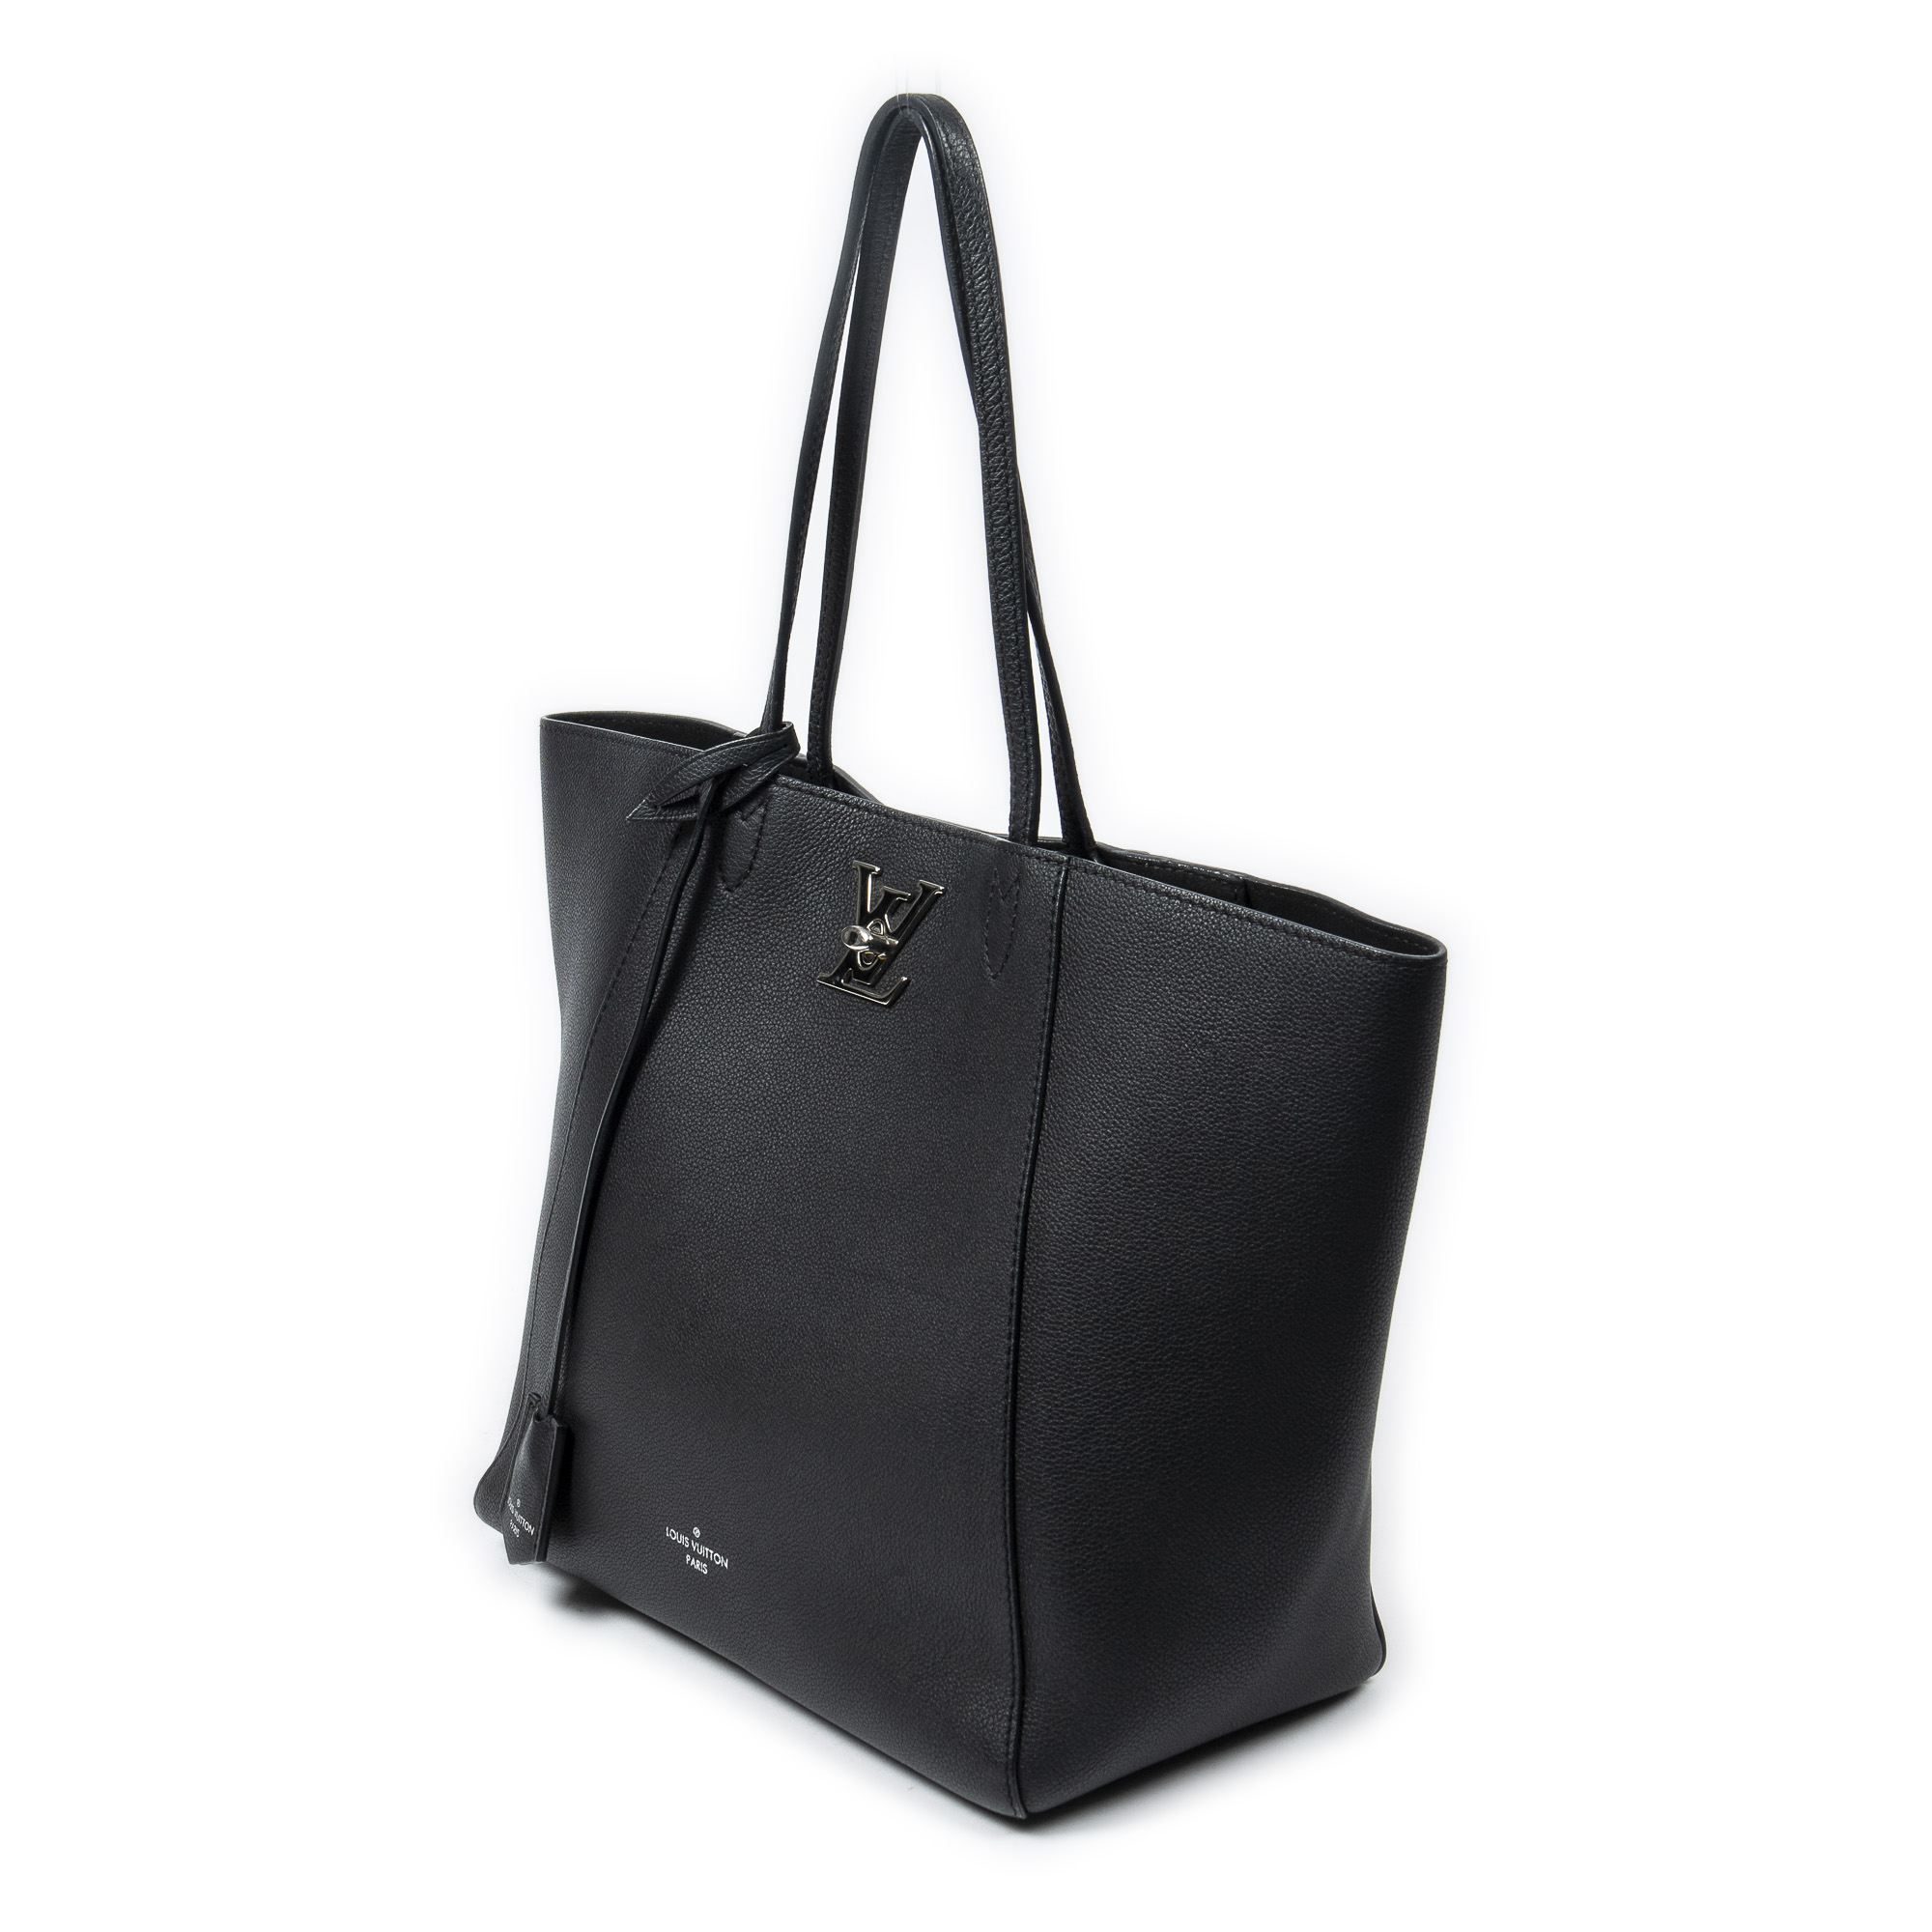 Louis Vuitton Lock Me Cover Tote Bag